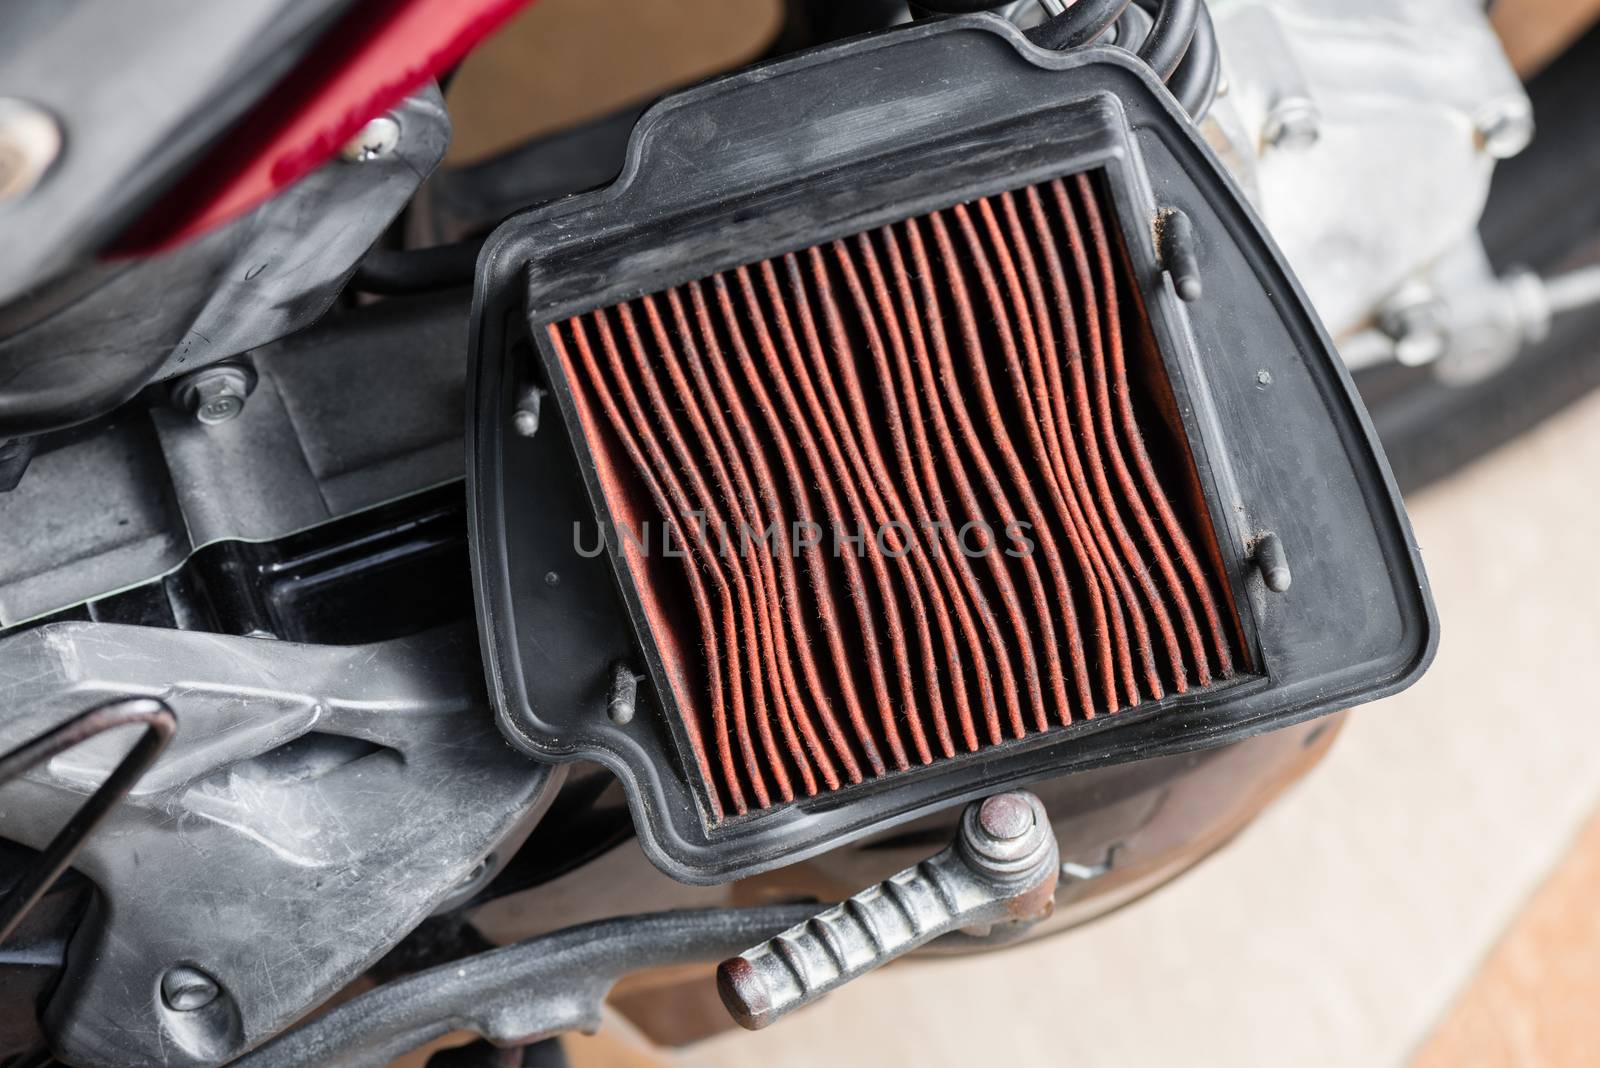 closeup worn motorcycle air filter. Motorcycle maintenance concept.